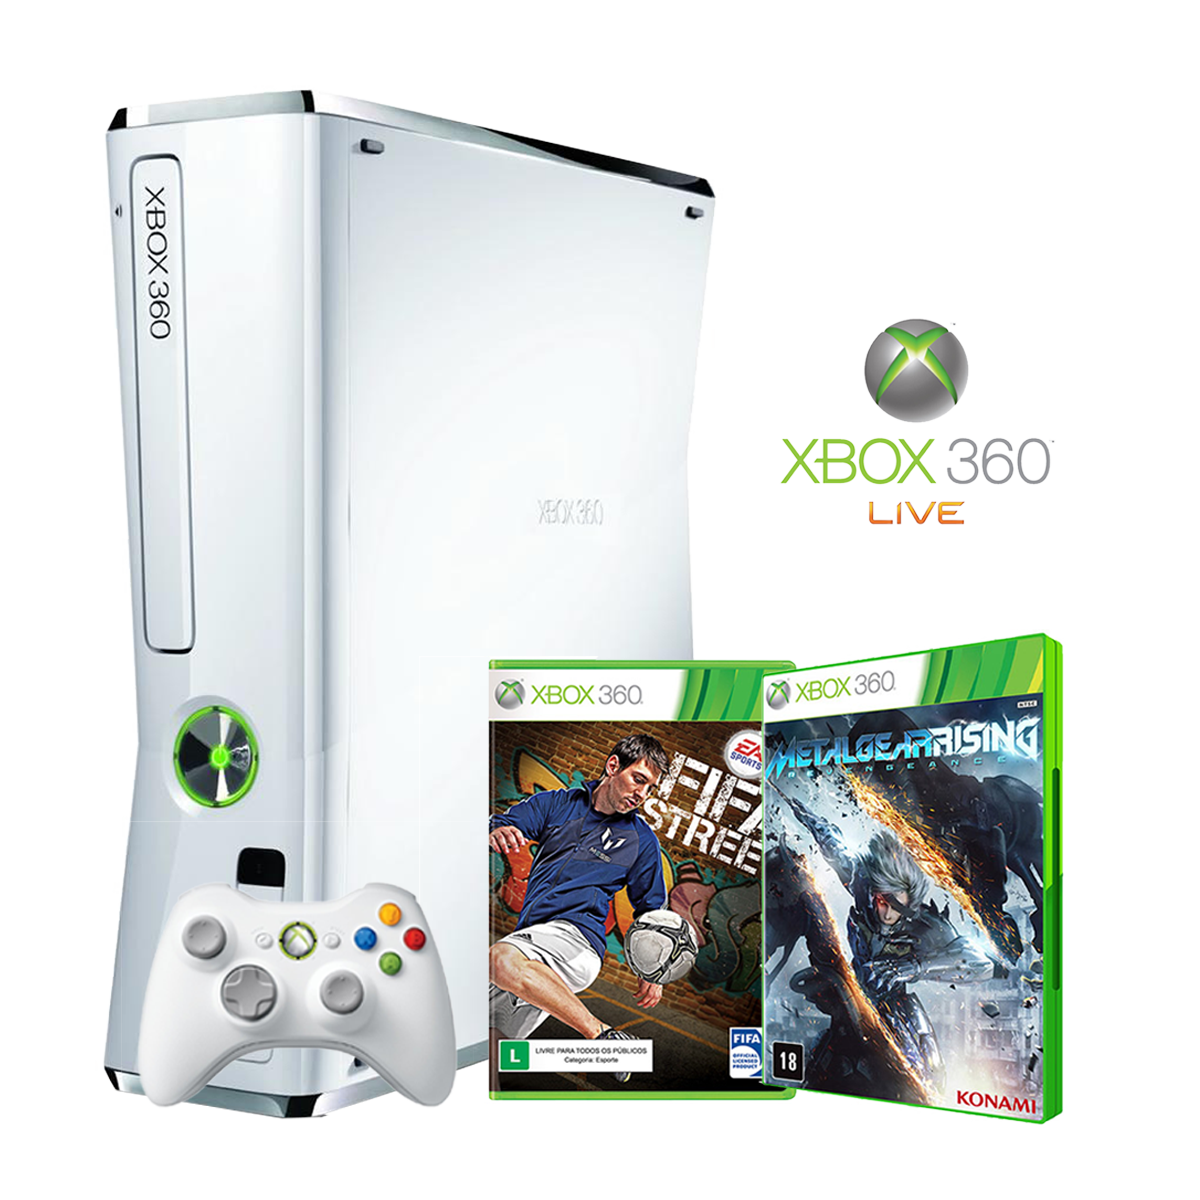 Console Xbox 360 Branco funcionando 100% - Acompanha ca